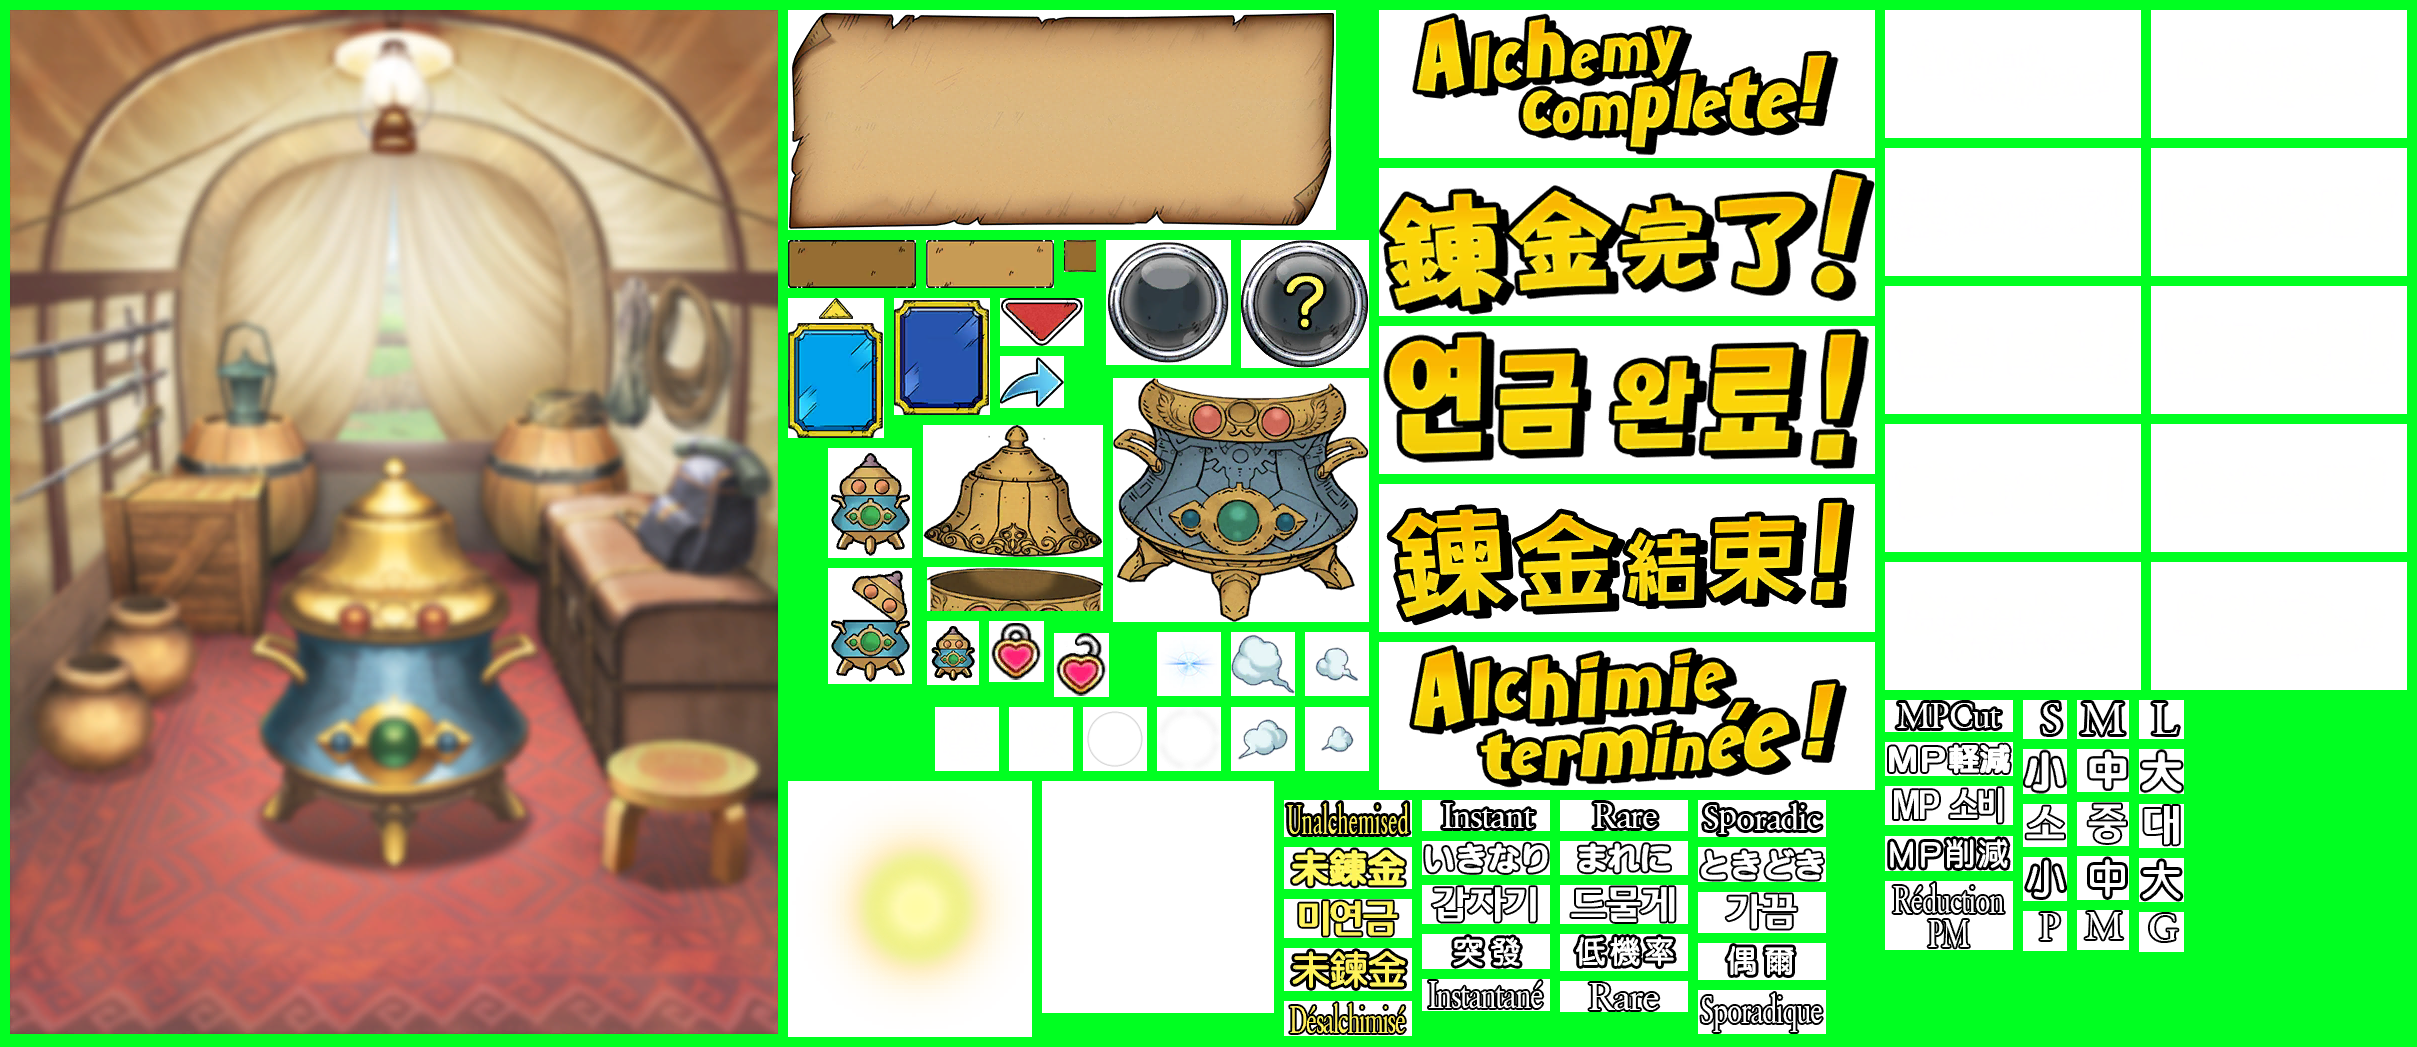 Dragon Quest Tact - Alchemise Equipment